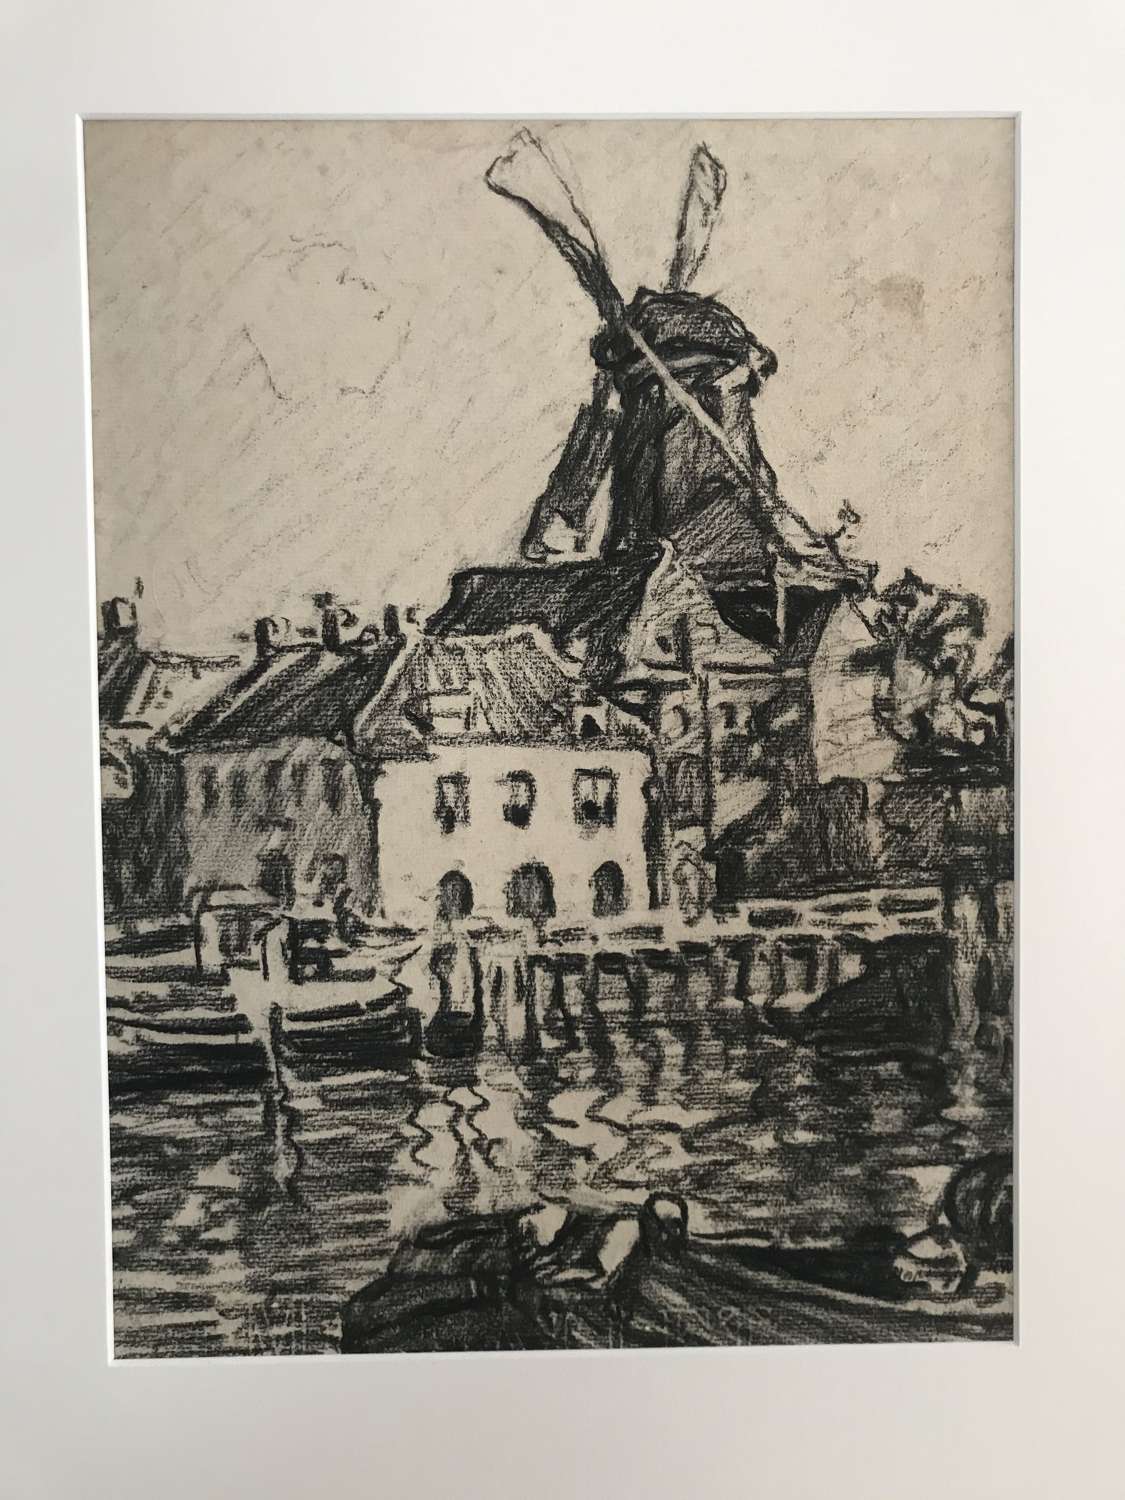 Charcoal sketch of a Dutch canal side scene circa 1910